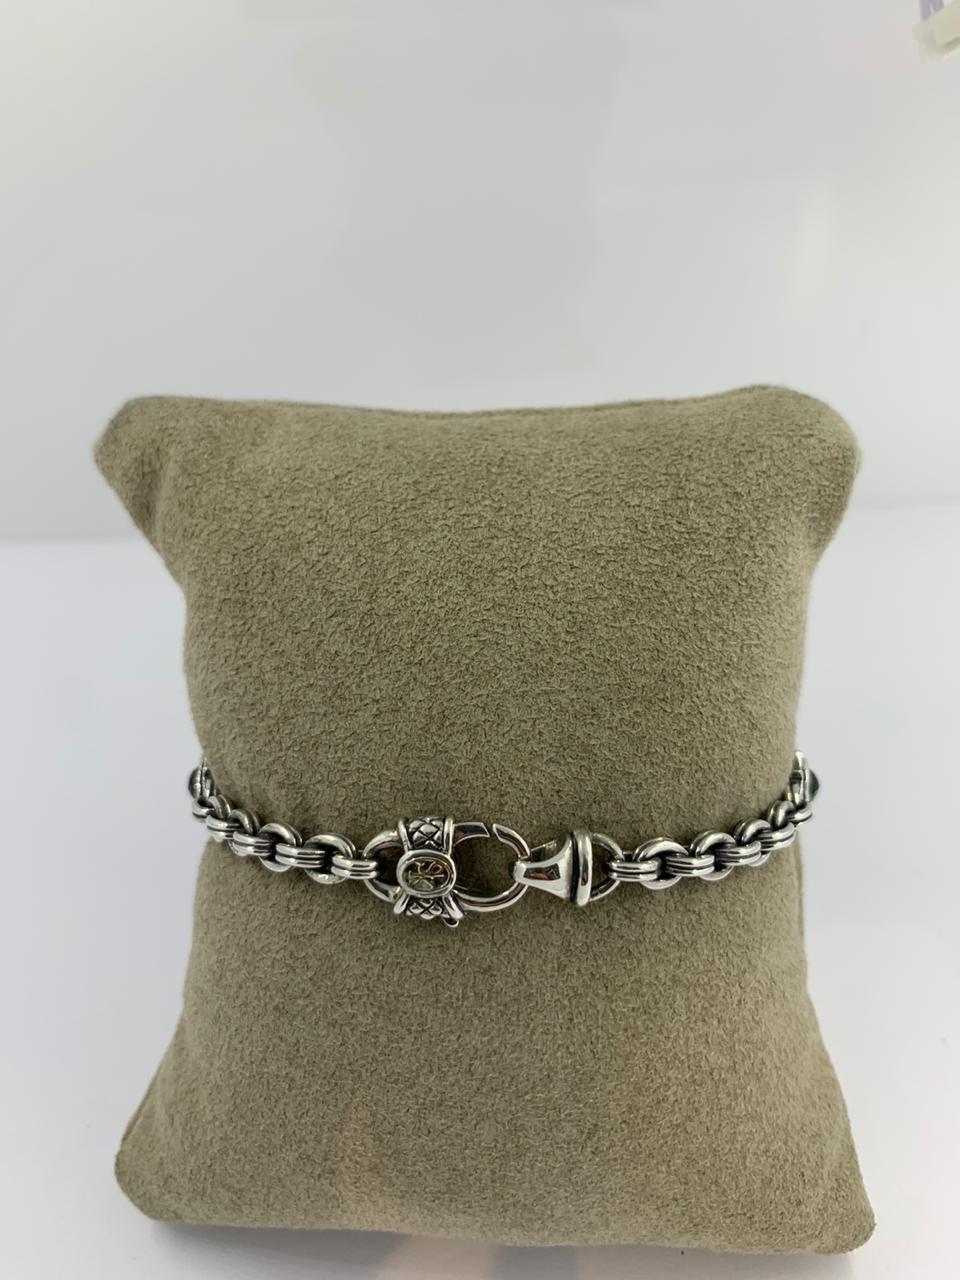 Scott Kay Silver Bracelet
1 row silver bracelet with green iolite
SKS-10269